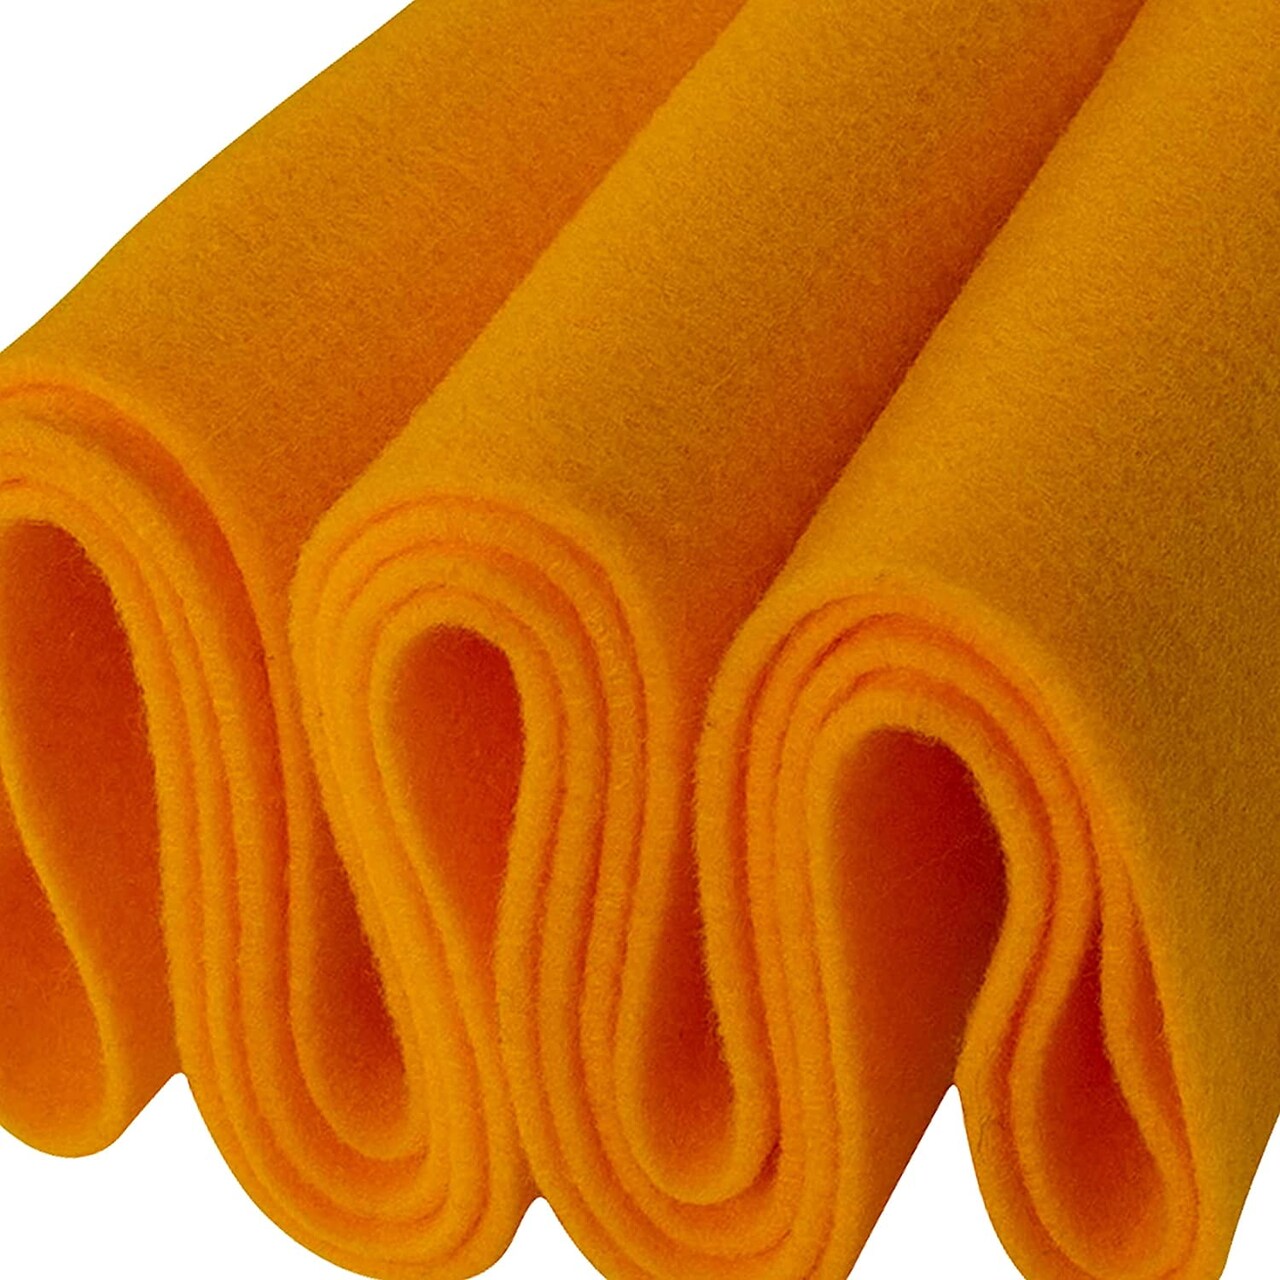 FabricLA Craft Felt Fabric - 18 X 18 Inch Wide & 1.6mm Thick Felt Fabric  - Mango A003 - Use This Soft Felt for Crafts - Felt Material Pack